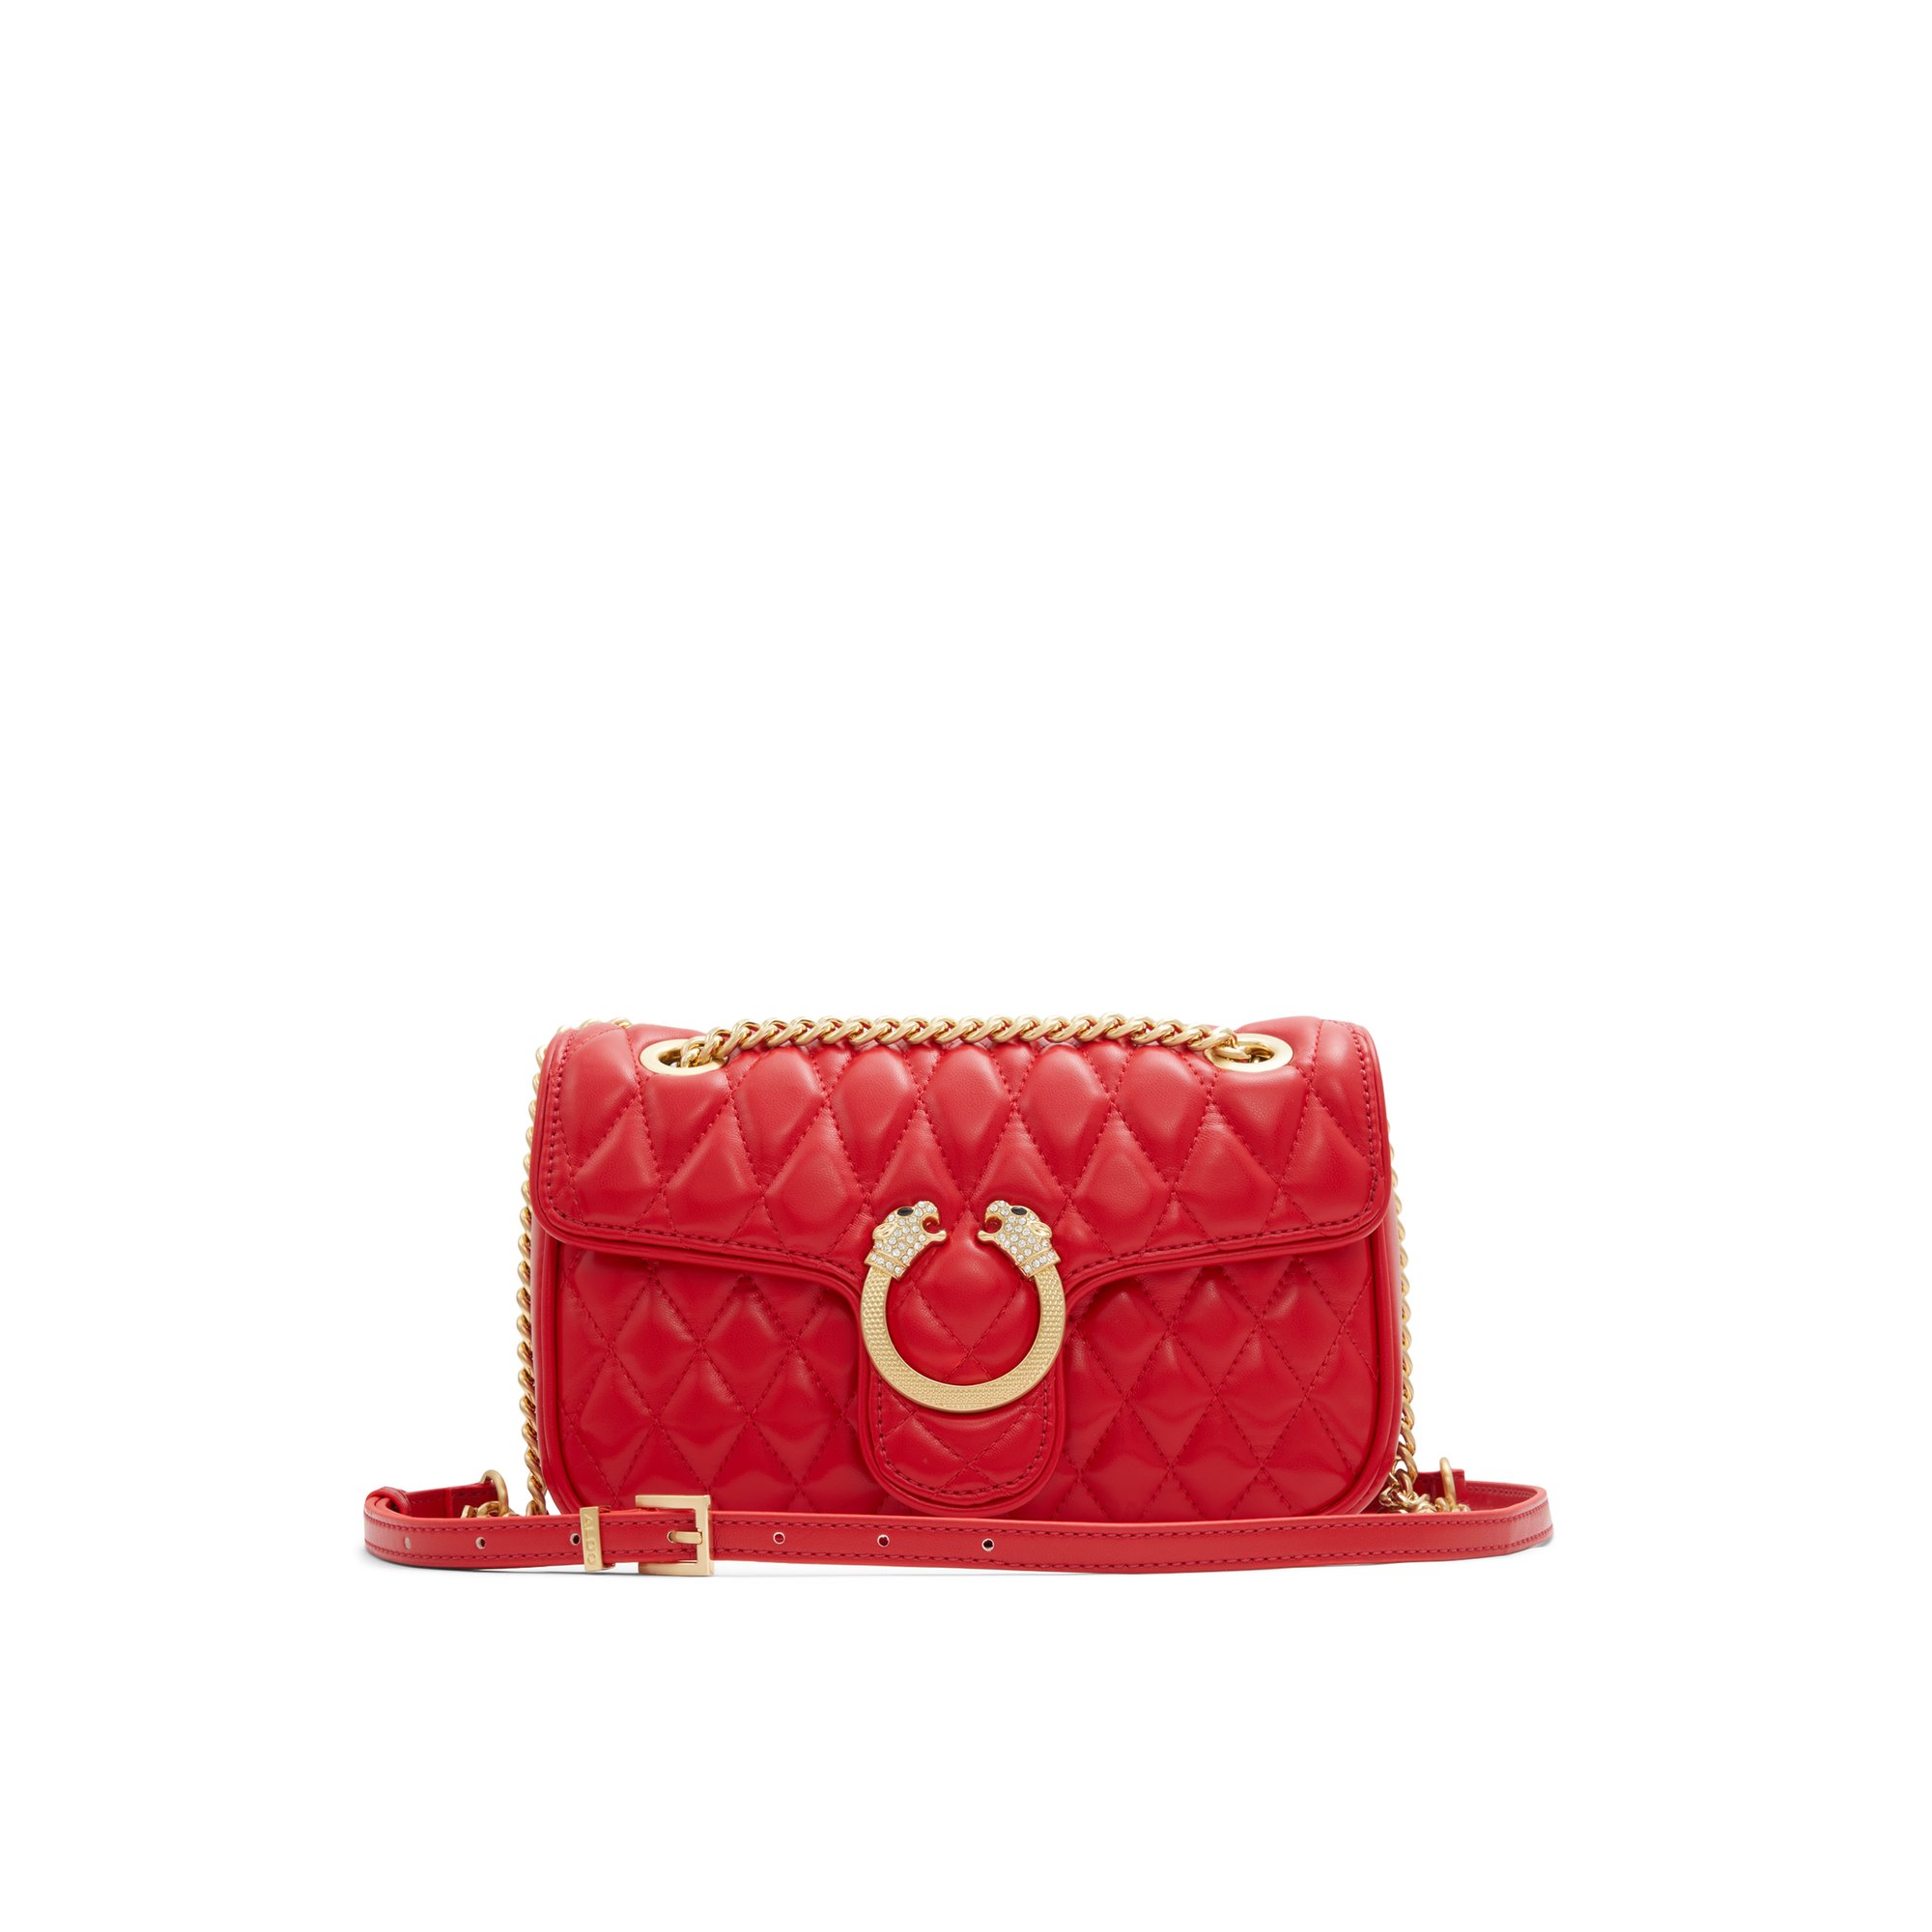 ALDO Marleighhx - Women's Crossbody Handbag - Red